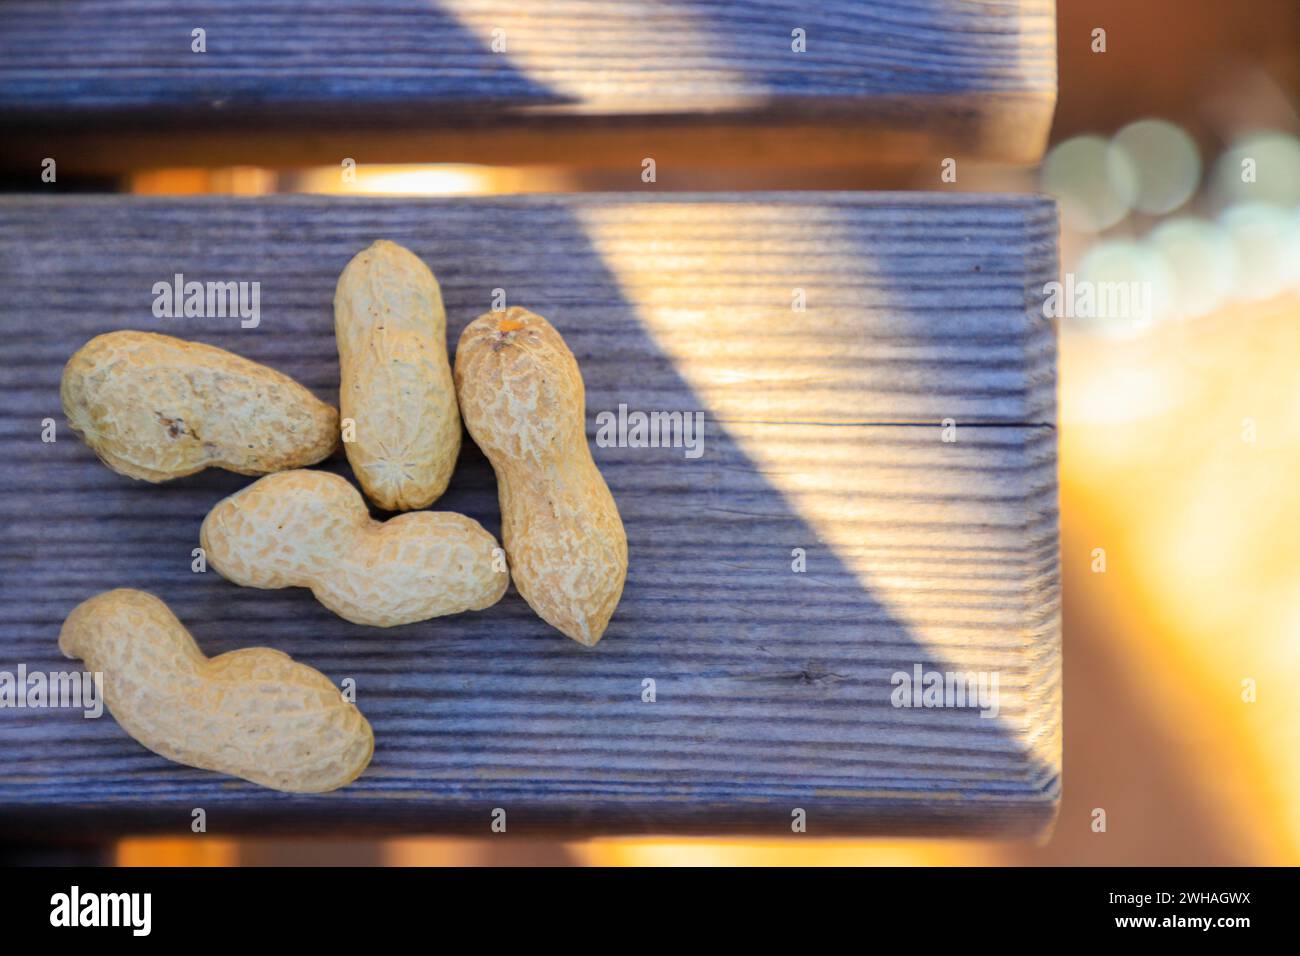 Un mucchio di arachidi disposte su una panchina rustica in legno Foto Stock